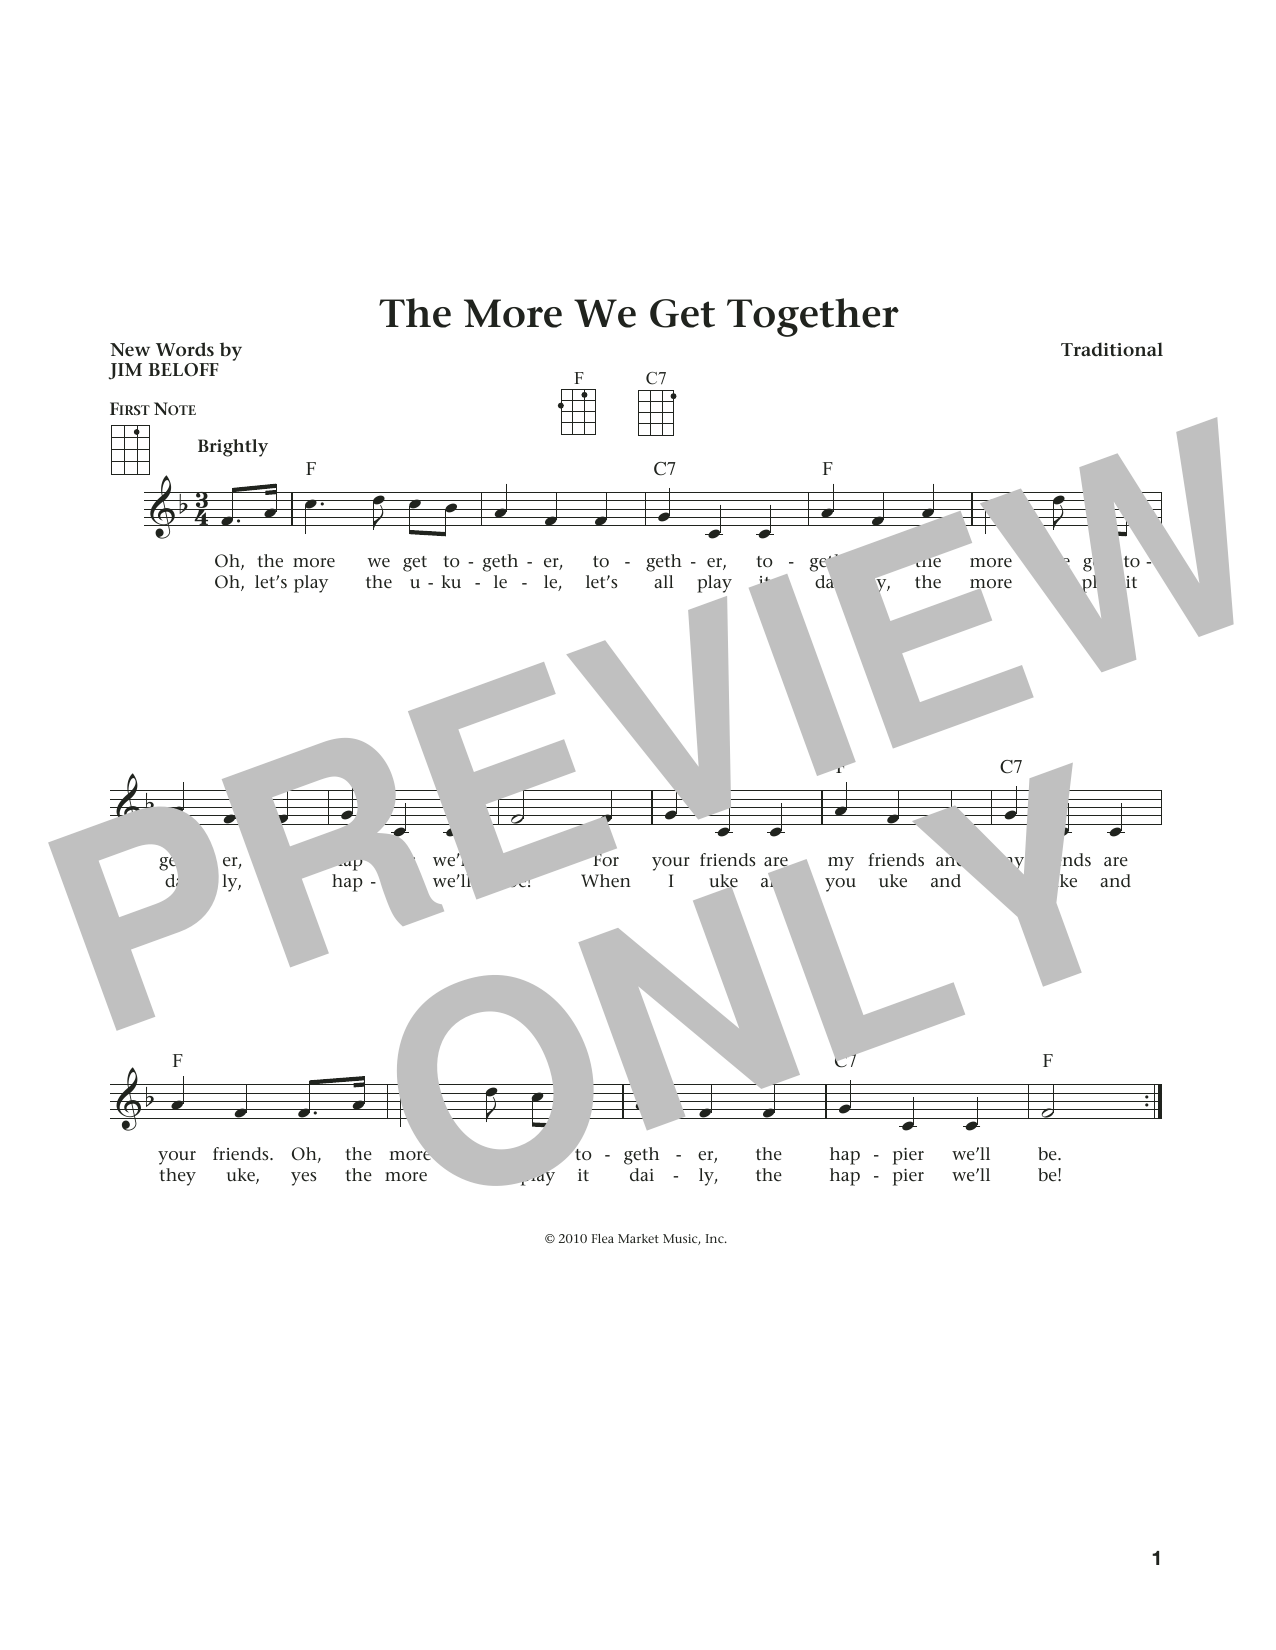 German Folk Song More We Get Together (from The Daily Ukulele) (arr. Liz and Jim Beloff) Sheet Music Notes & Chords for Ukulele - Download or Print PDF